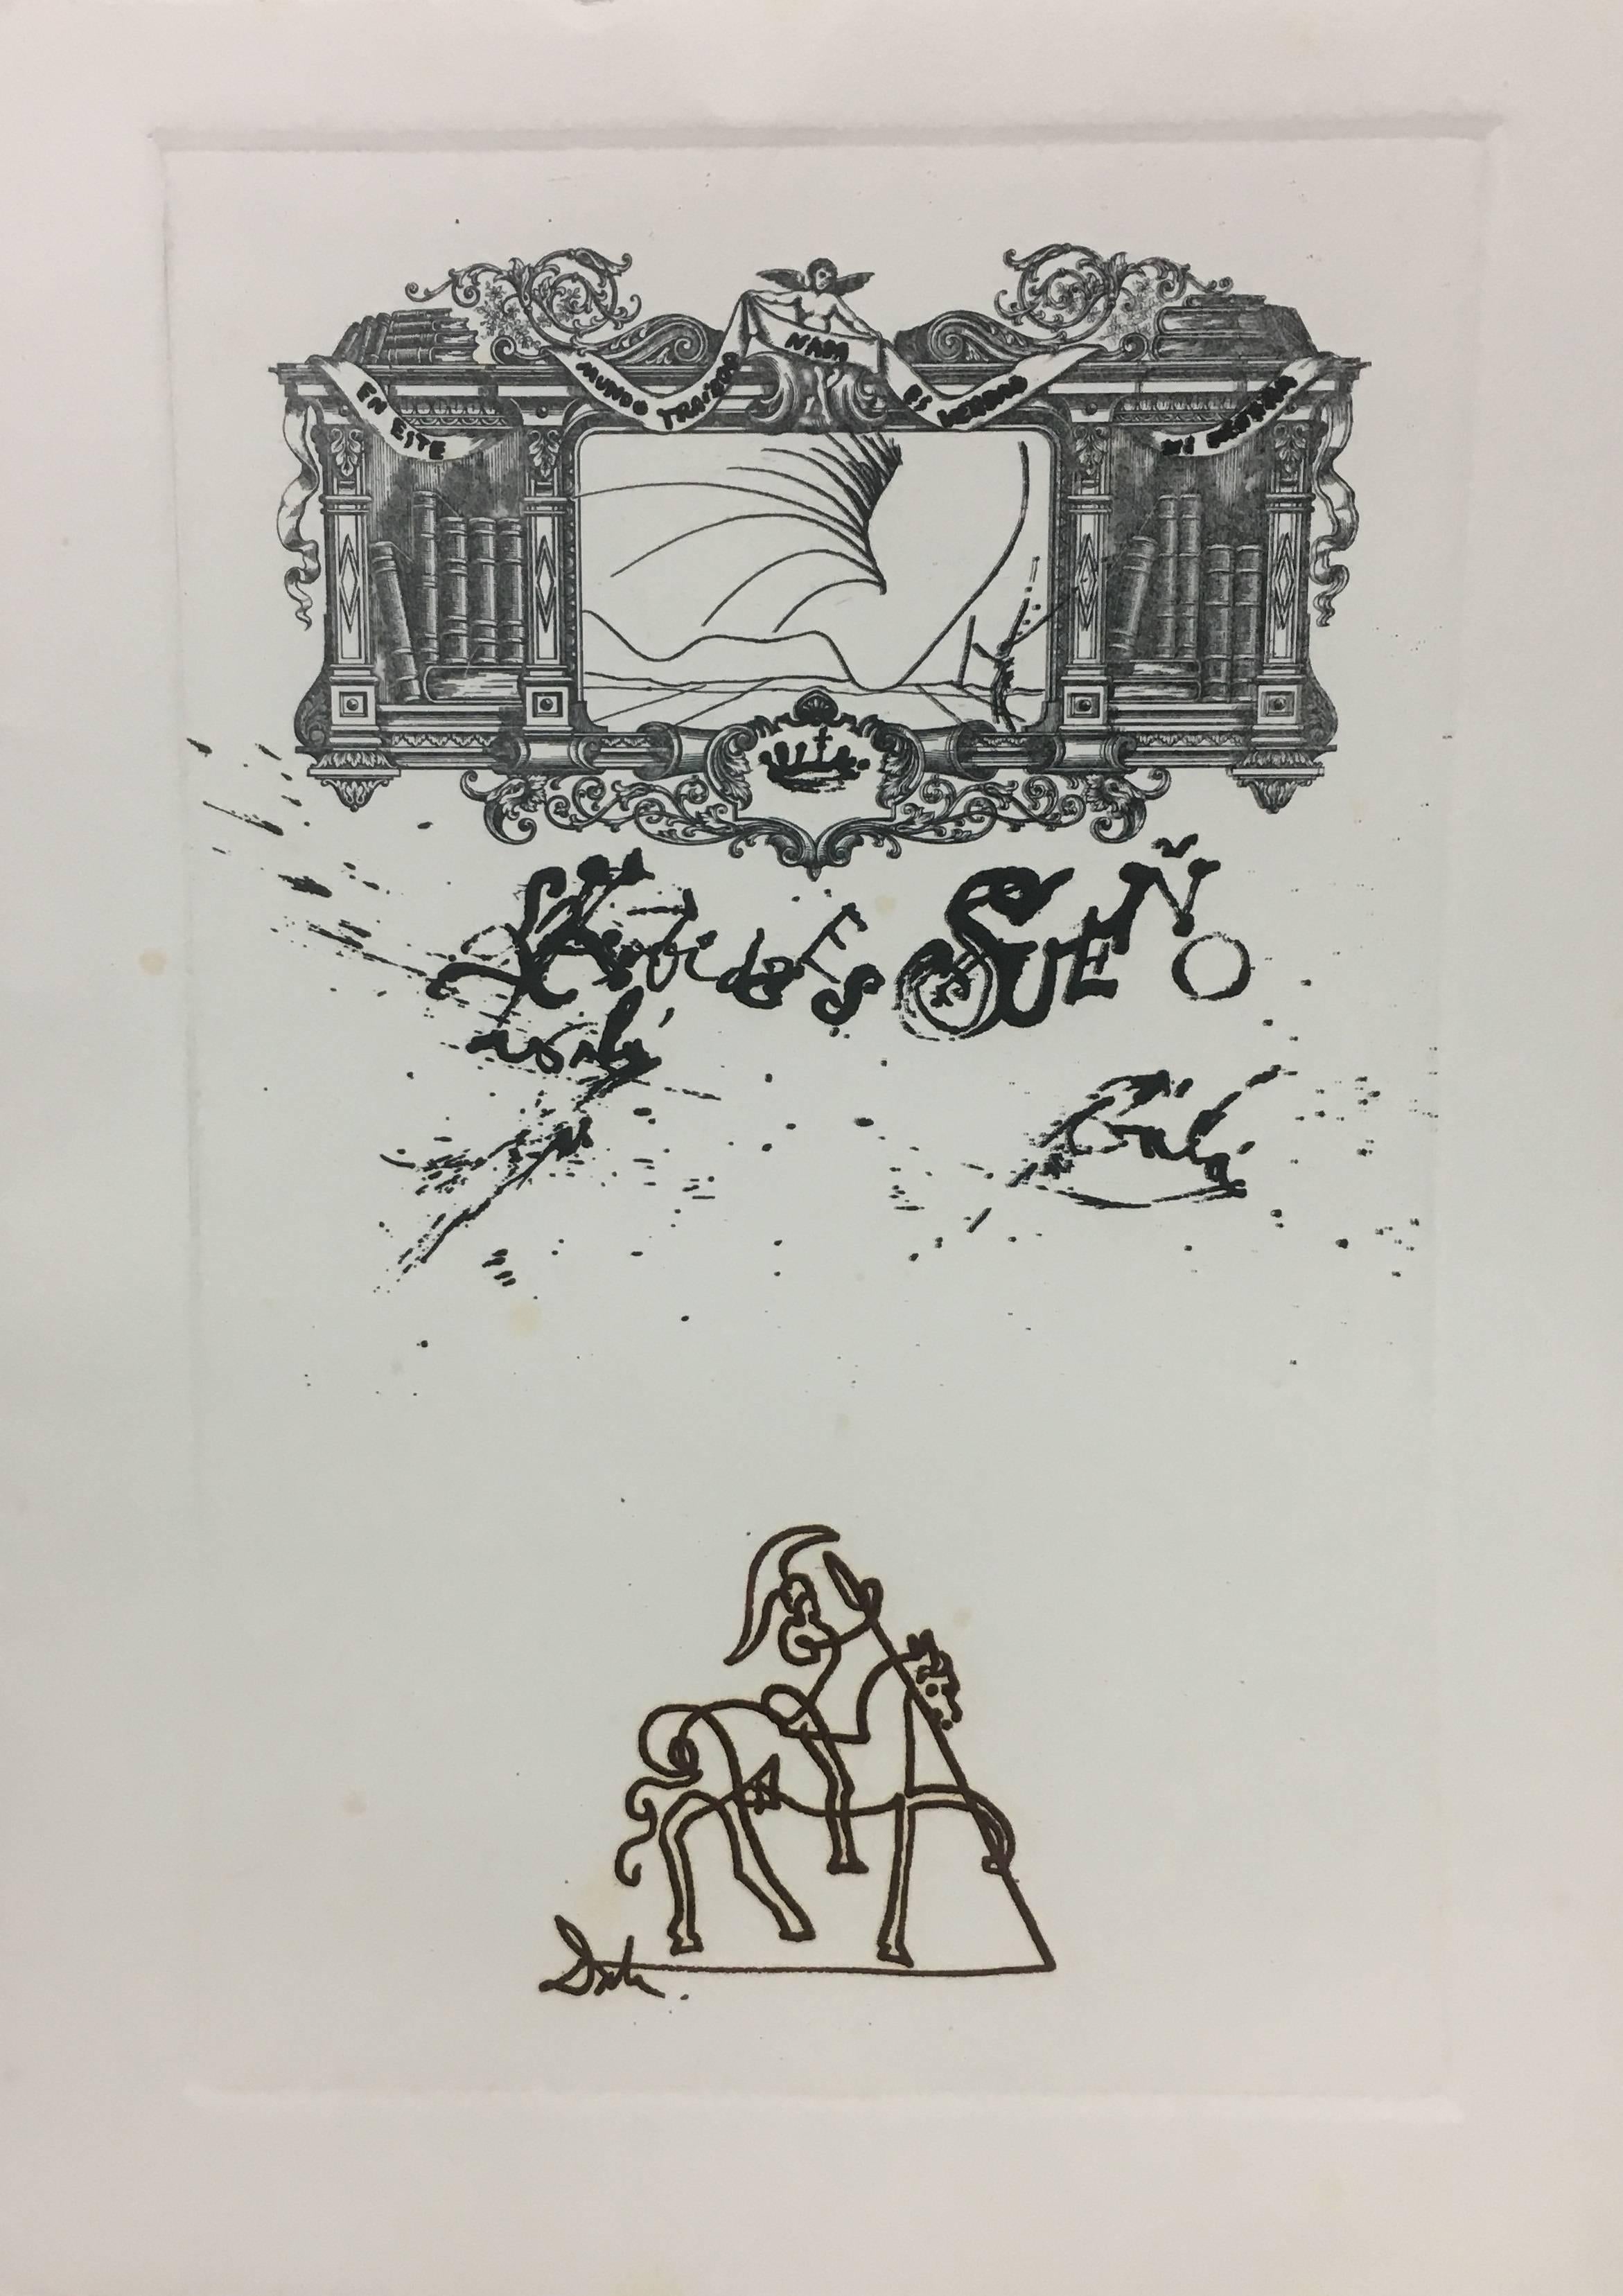 LA VIDA ES SUEÑO: title plate engraving painting - Print by Salvador Dalí